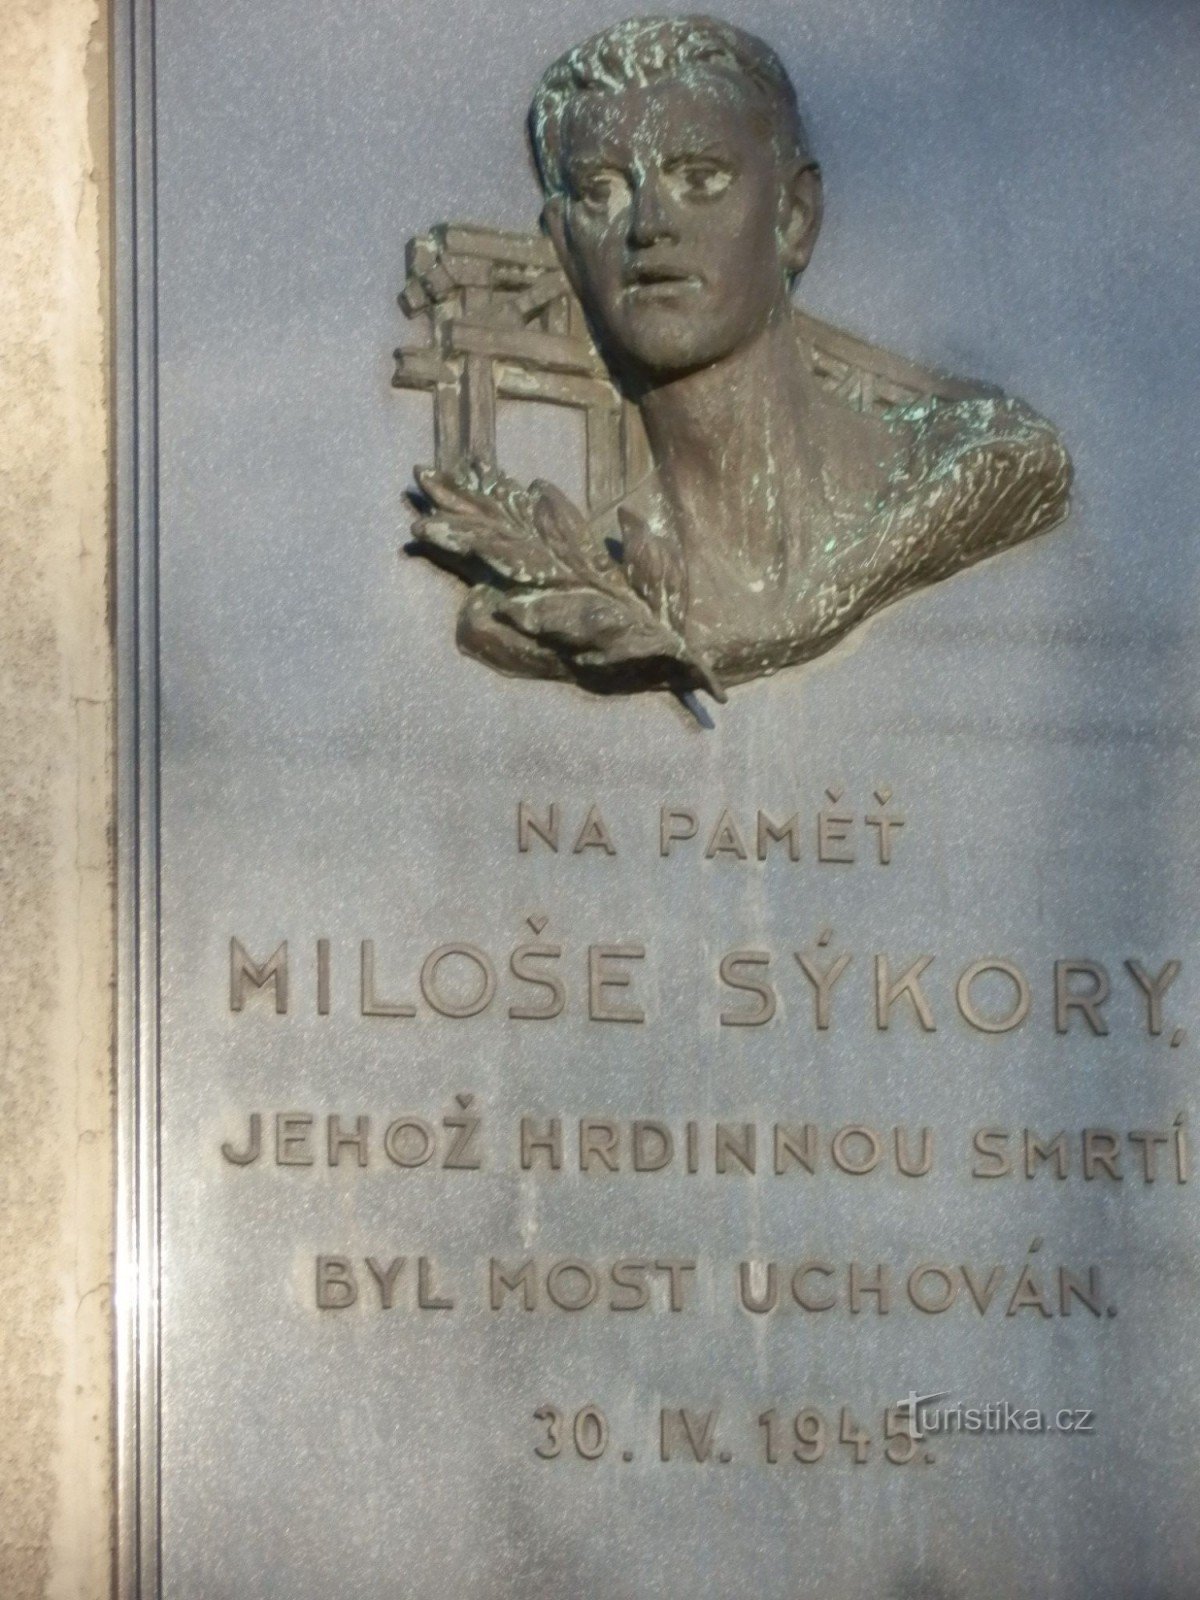 Statue of Miloš Sýkora - savior of the bridge